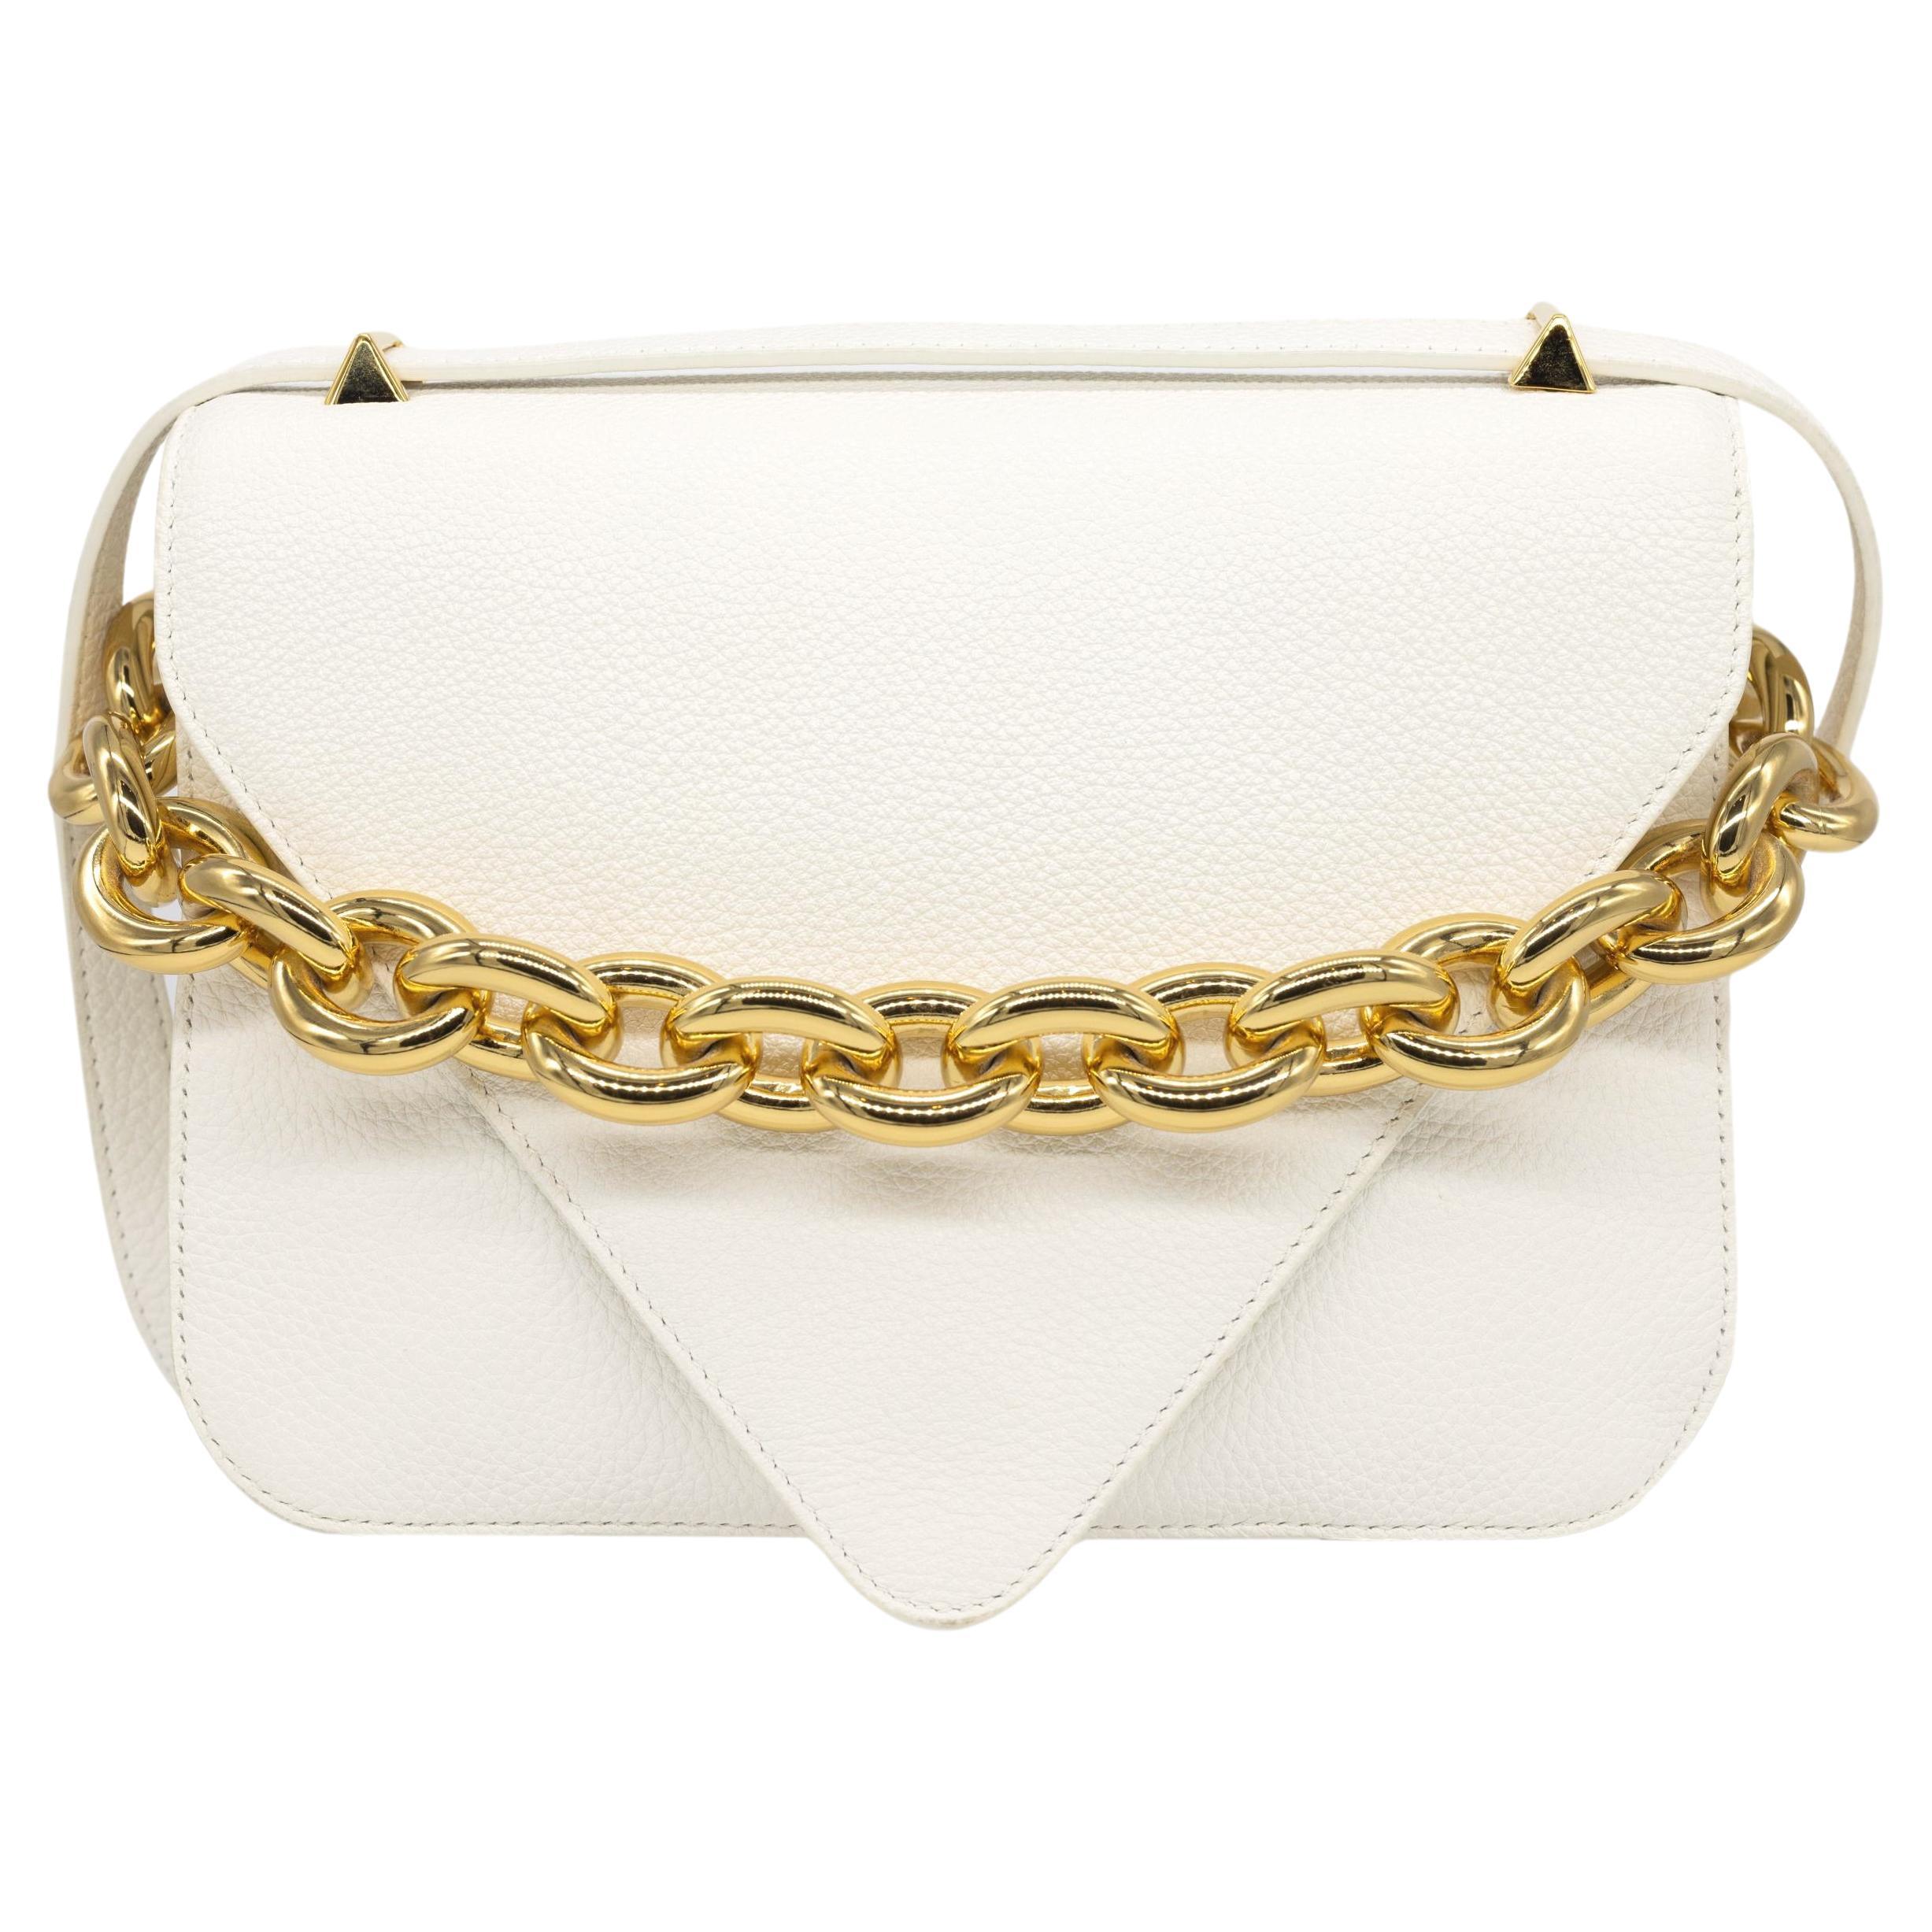 Bottega Veneta Mount Envelope Small White Leather Top Handle Crossbody Bag For Sale